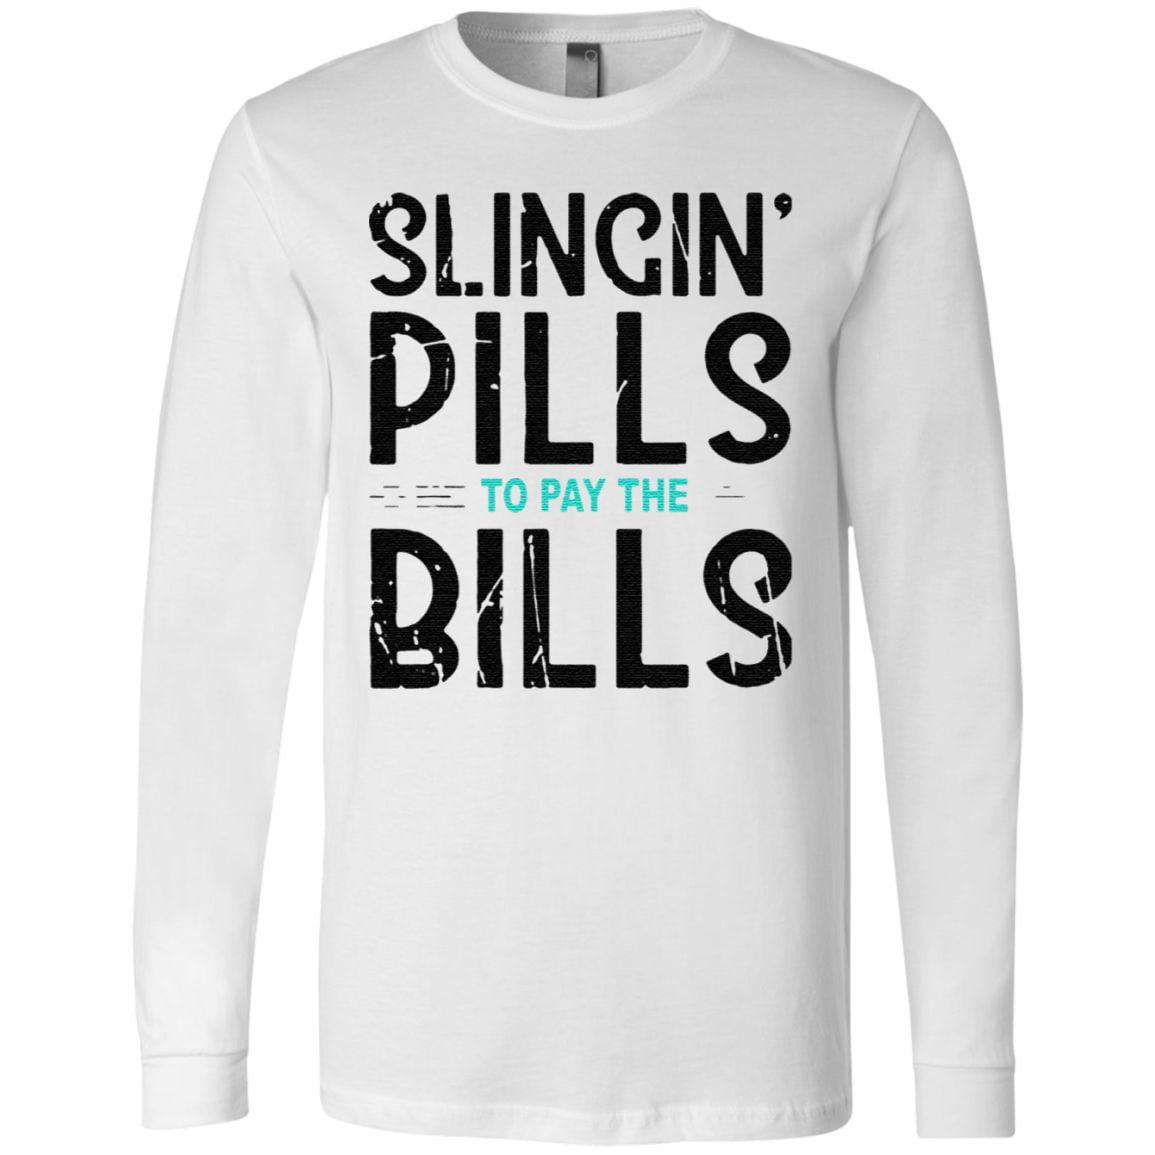 Slingin’ pills to pay the bills t shirt